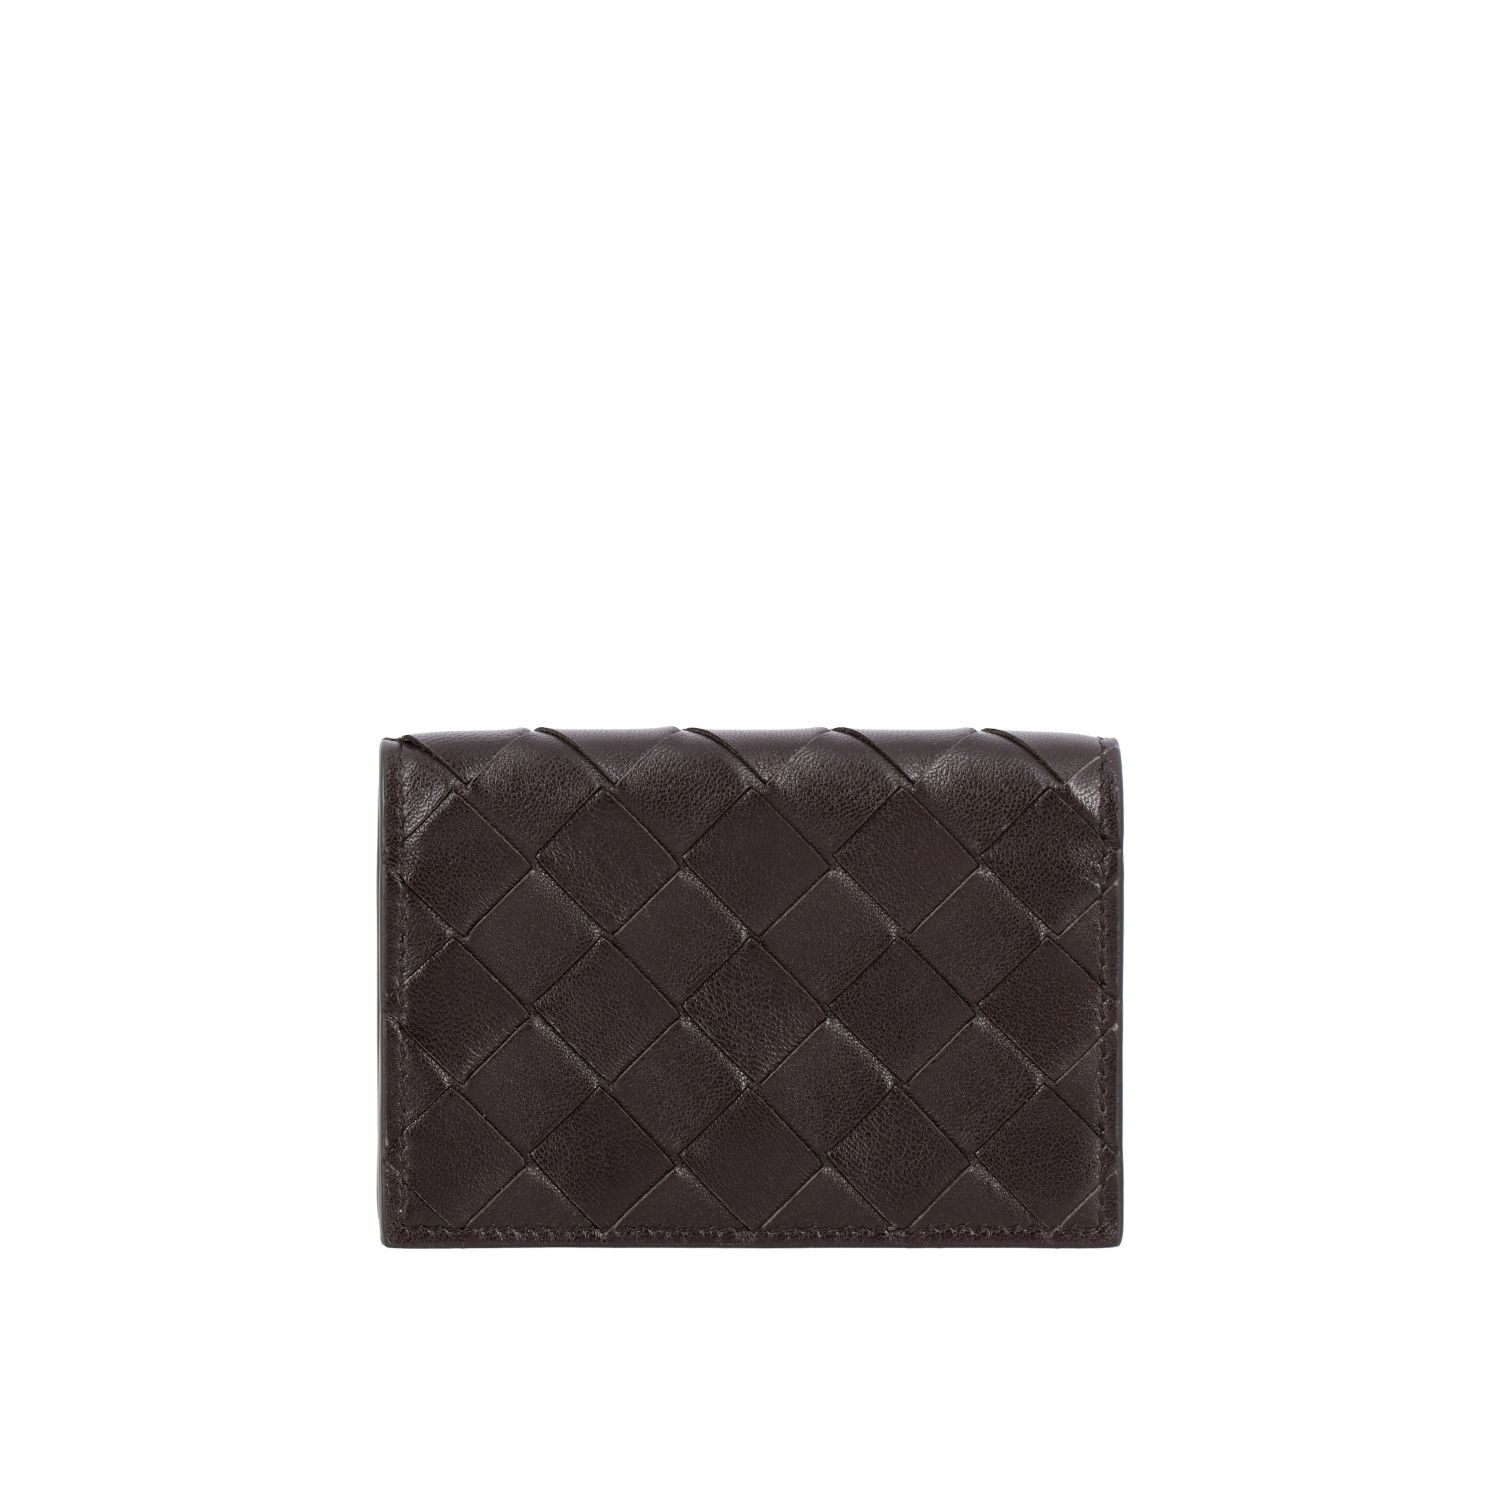 BOTTEGA VENETA: wallet in woven leather - Cocoa | Bottega Veneta wallet ...